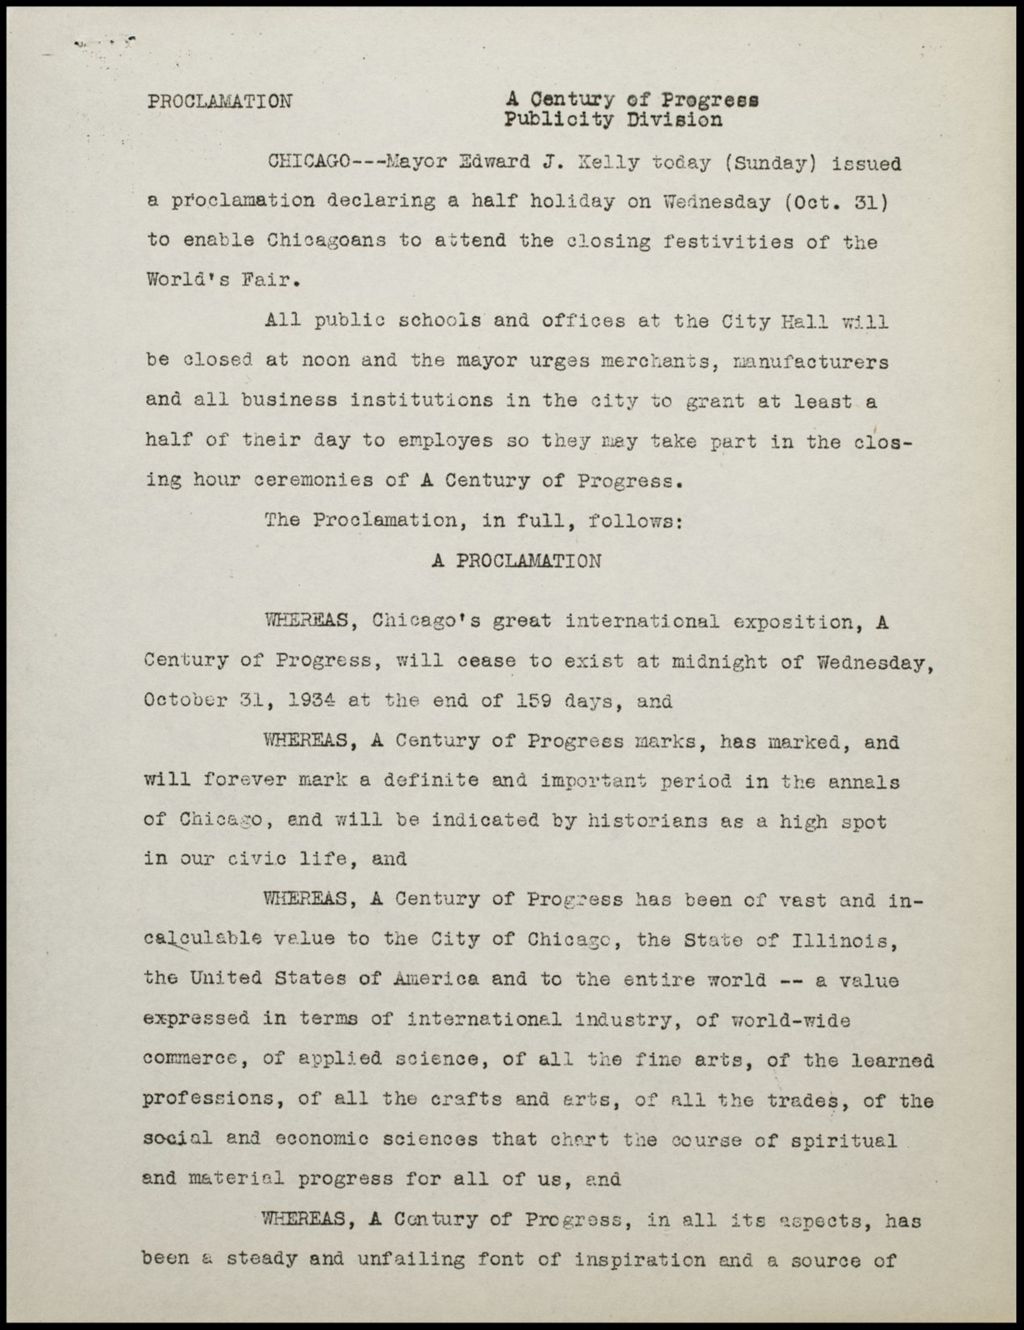 Miniature of Kelly Proclamation, October 1934 (Folder 14-221)